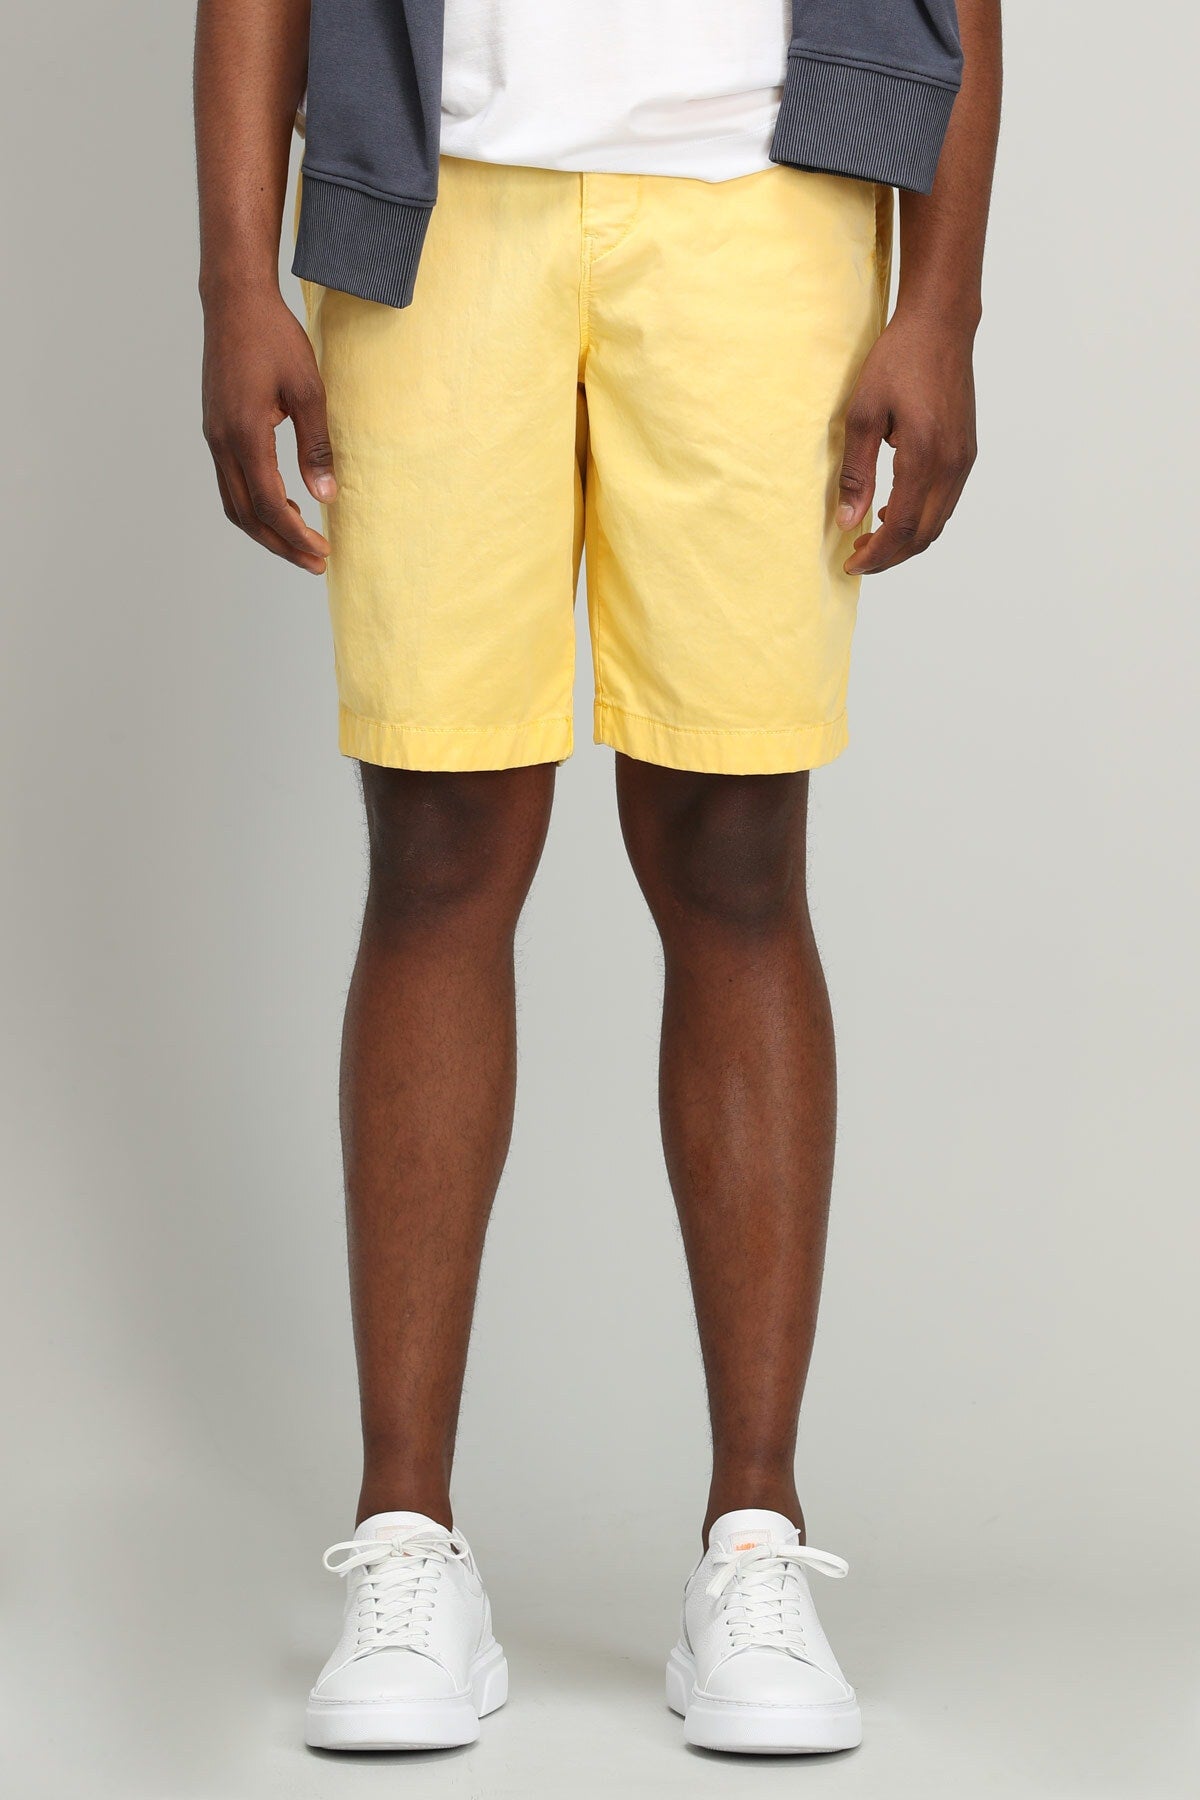 Zegler Sports Men's Chino Shorts Slim Fit Yellow